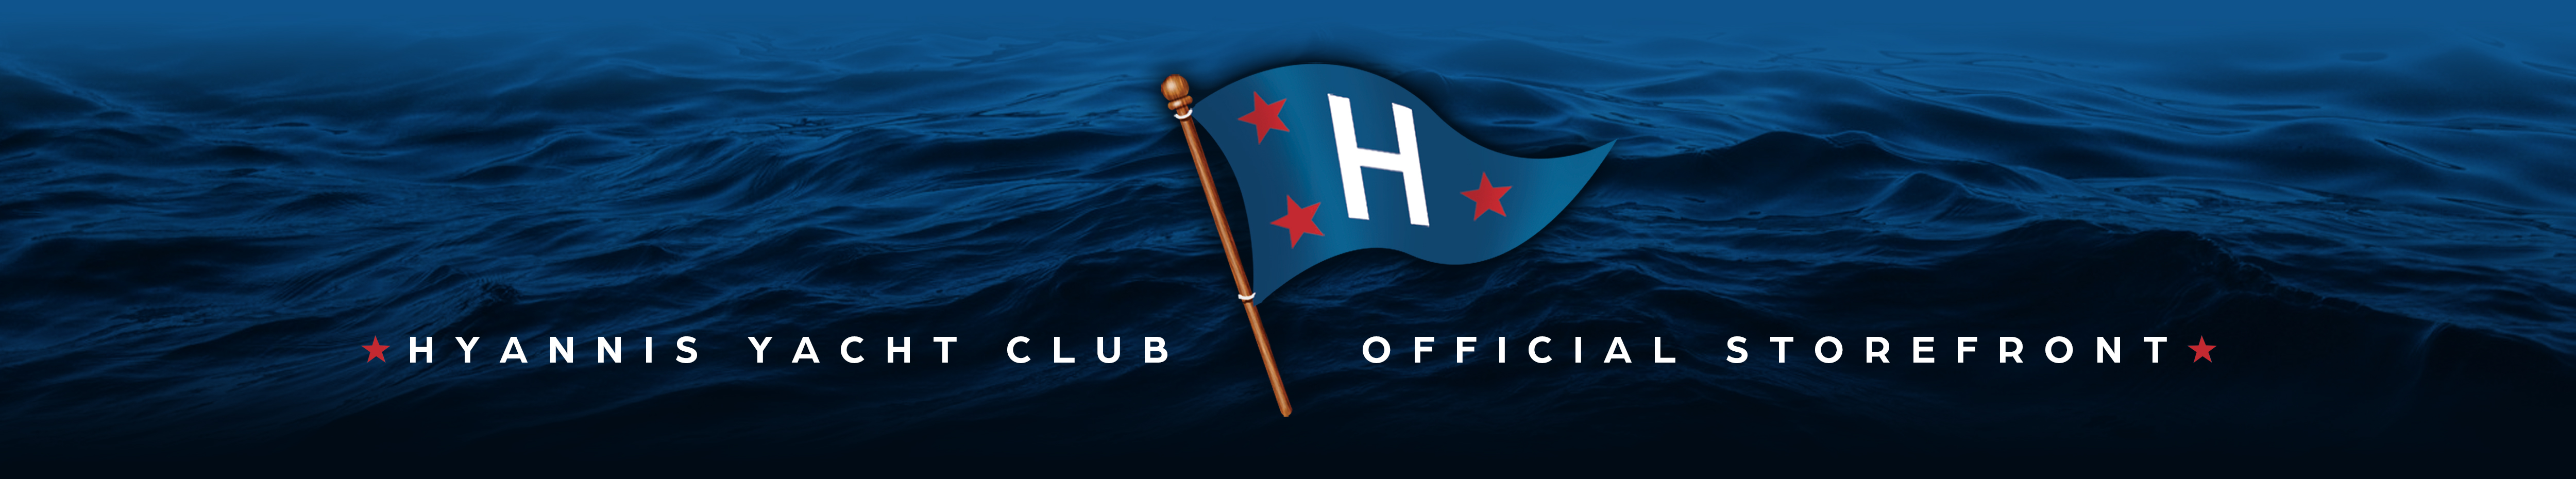 hyannis yacht club social membership